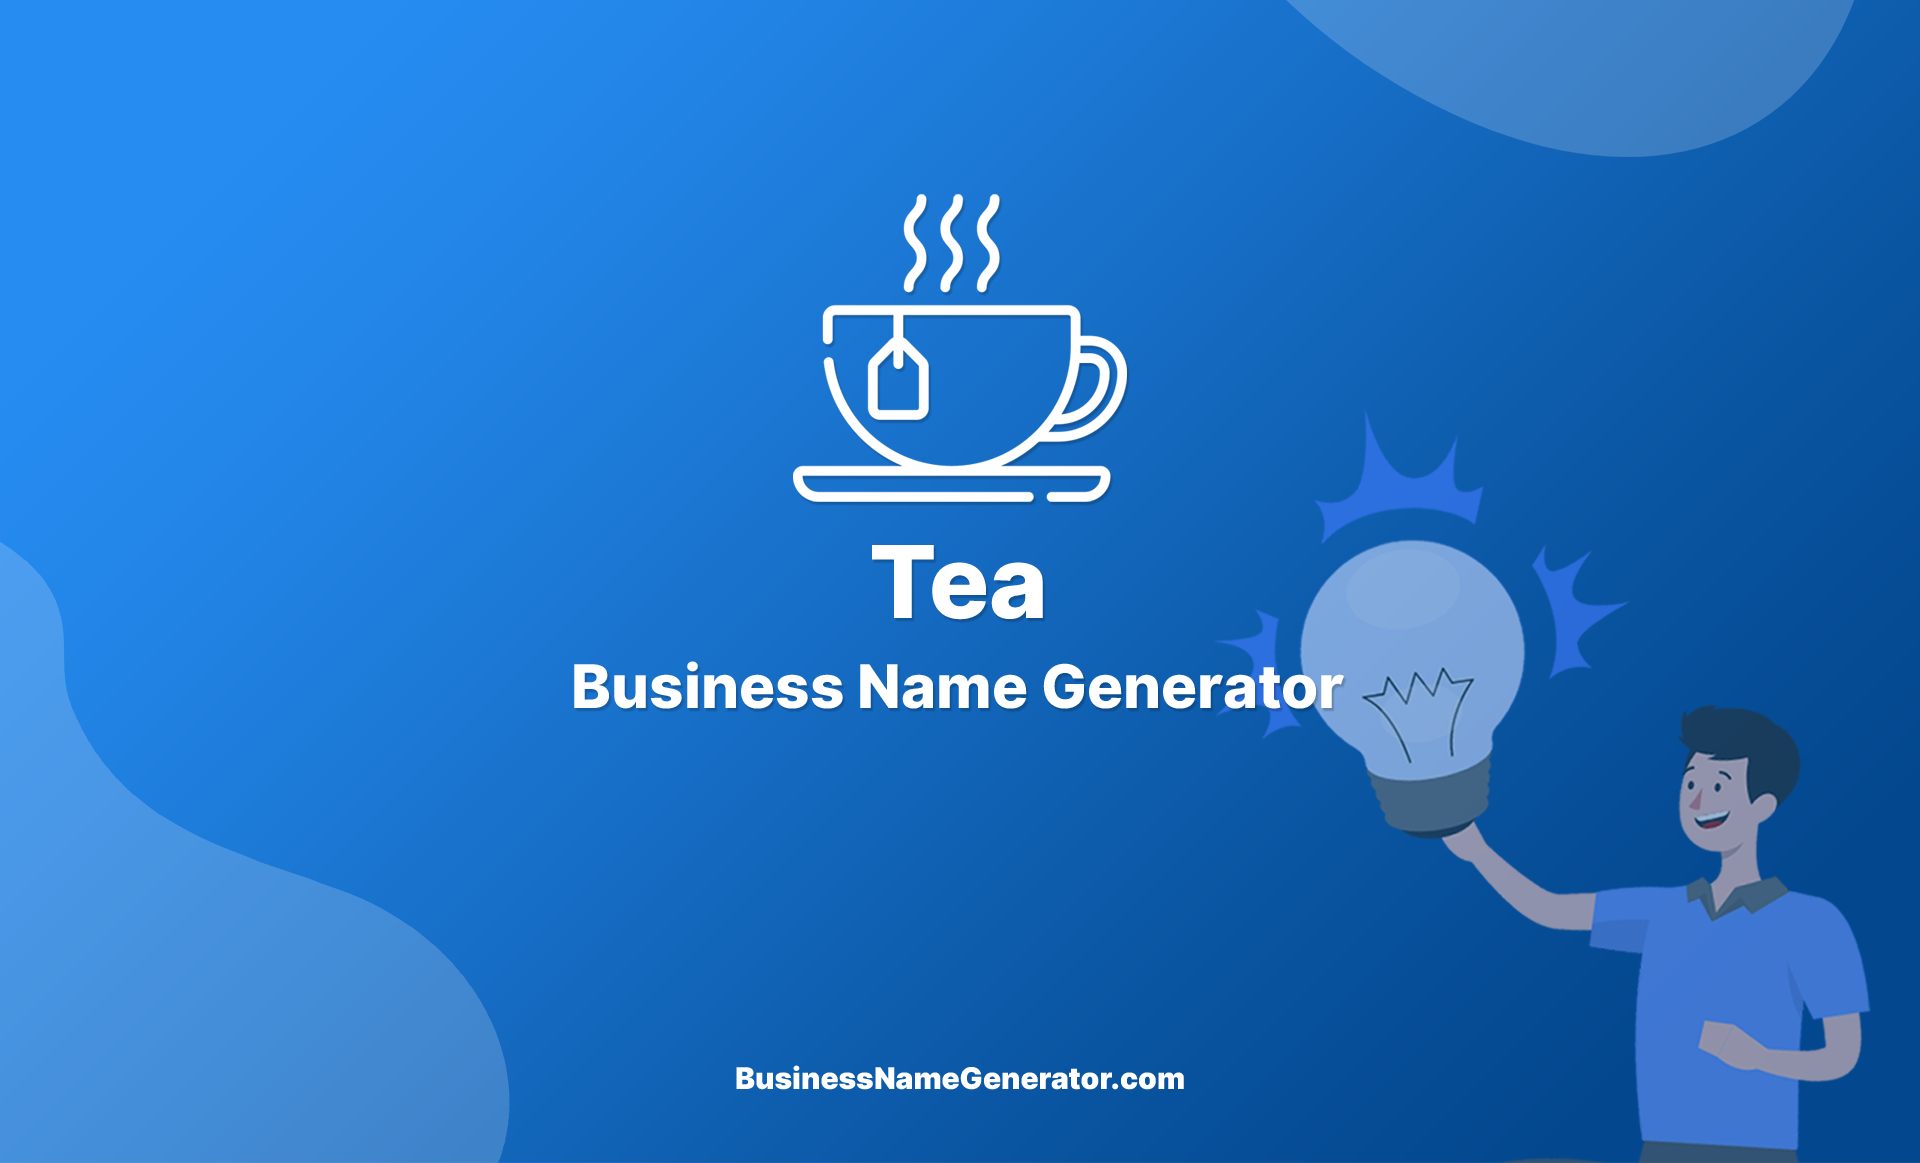 Tea Business Name Generator